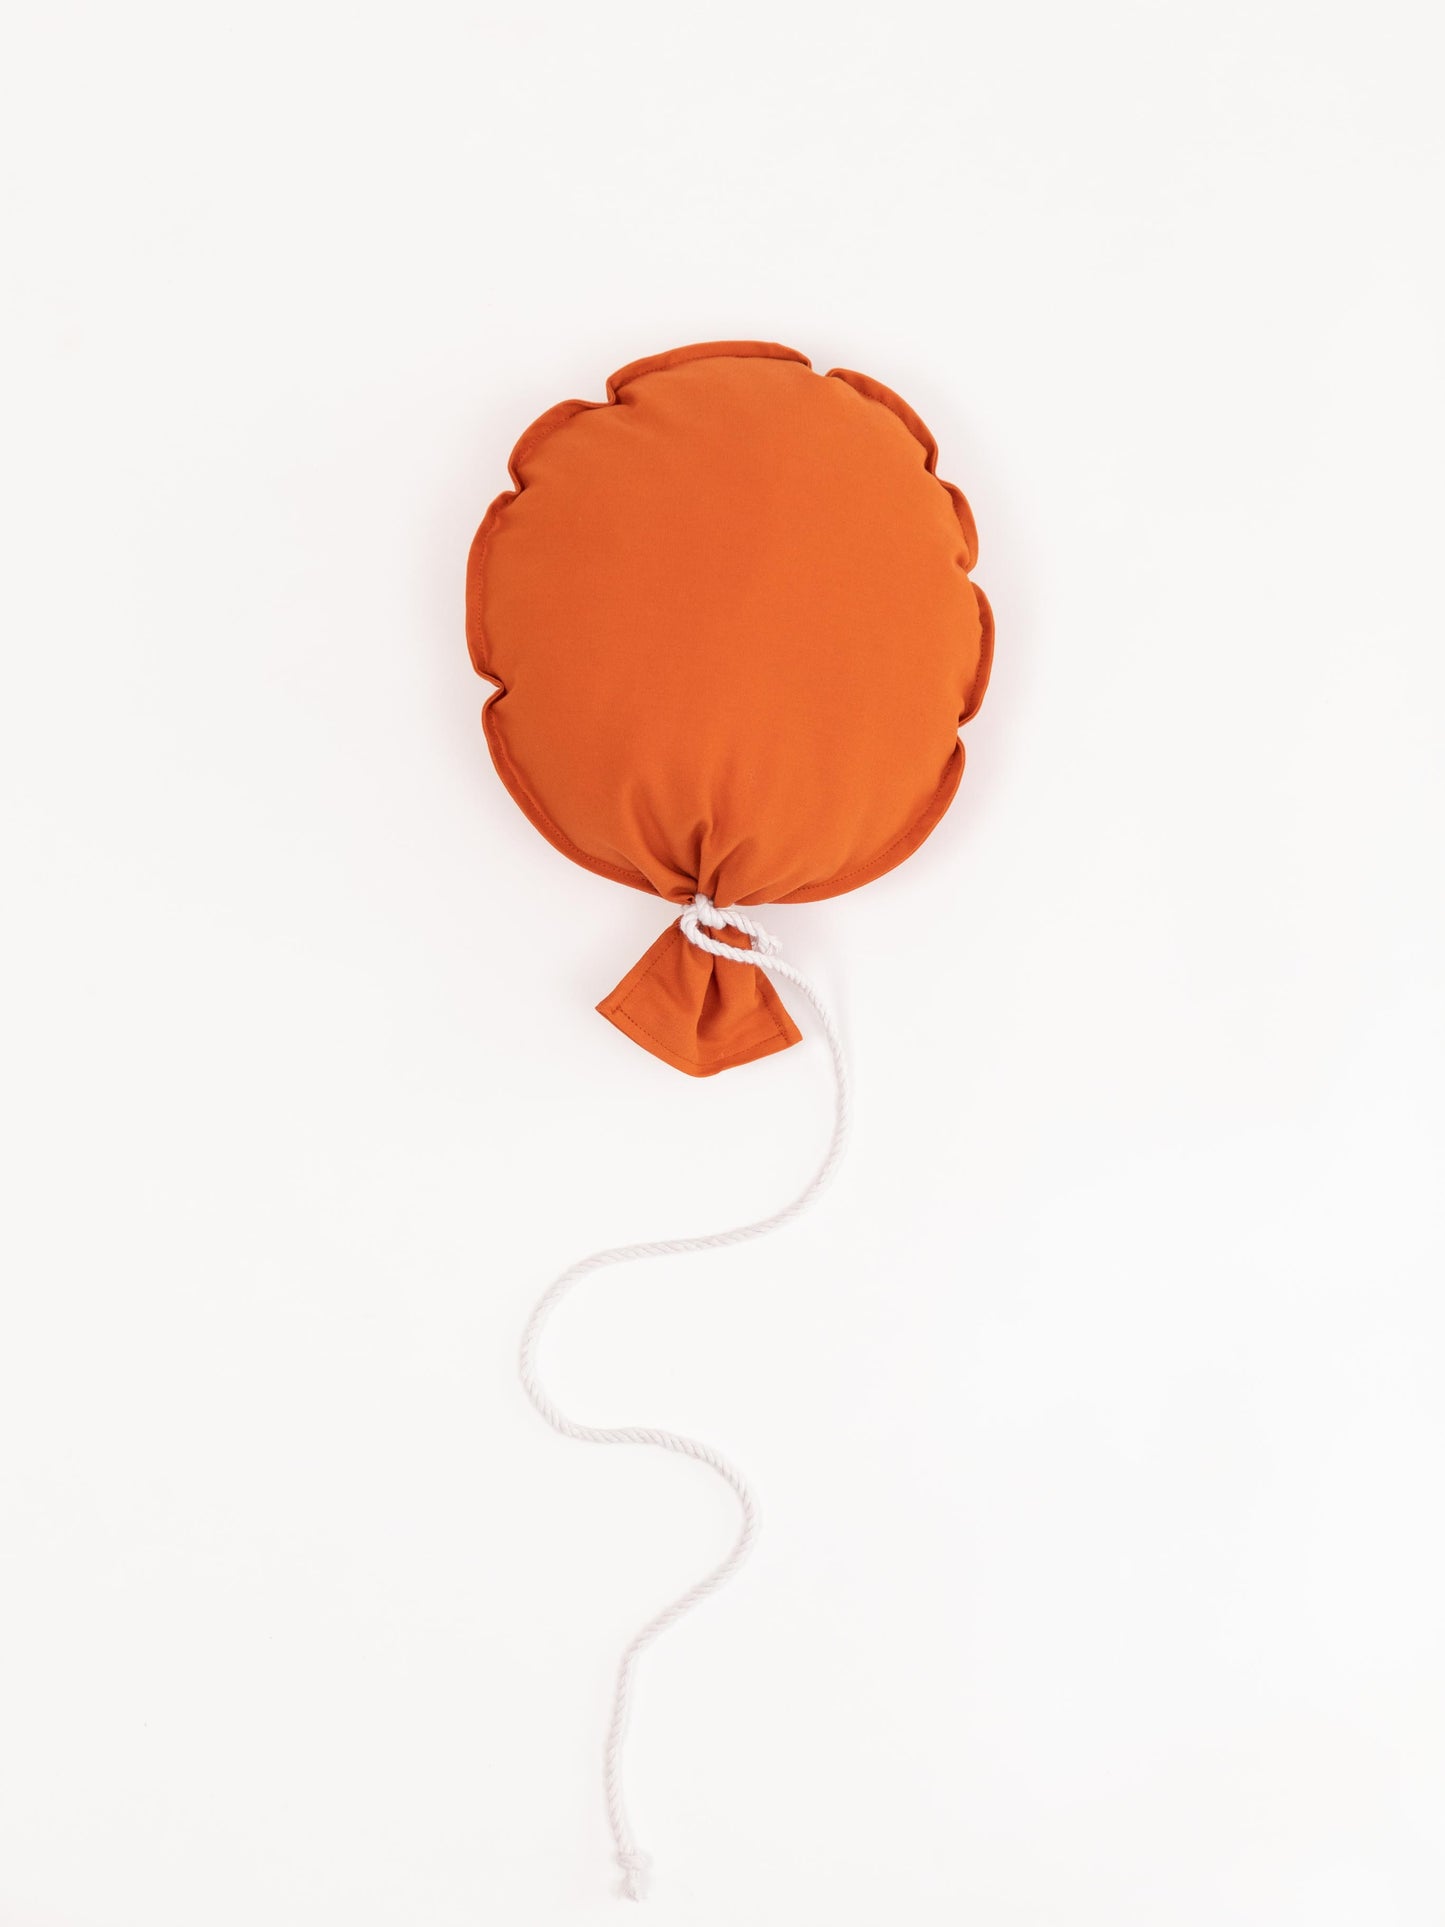 Kinderzimmer Wanddeko 'Stoff-Luftballon' Terracotta handmade